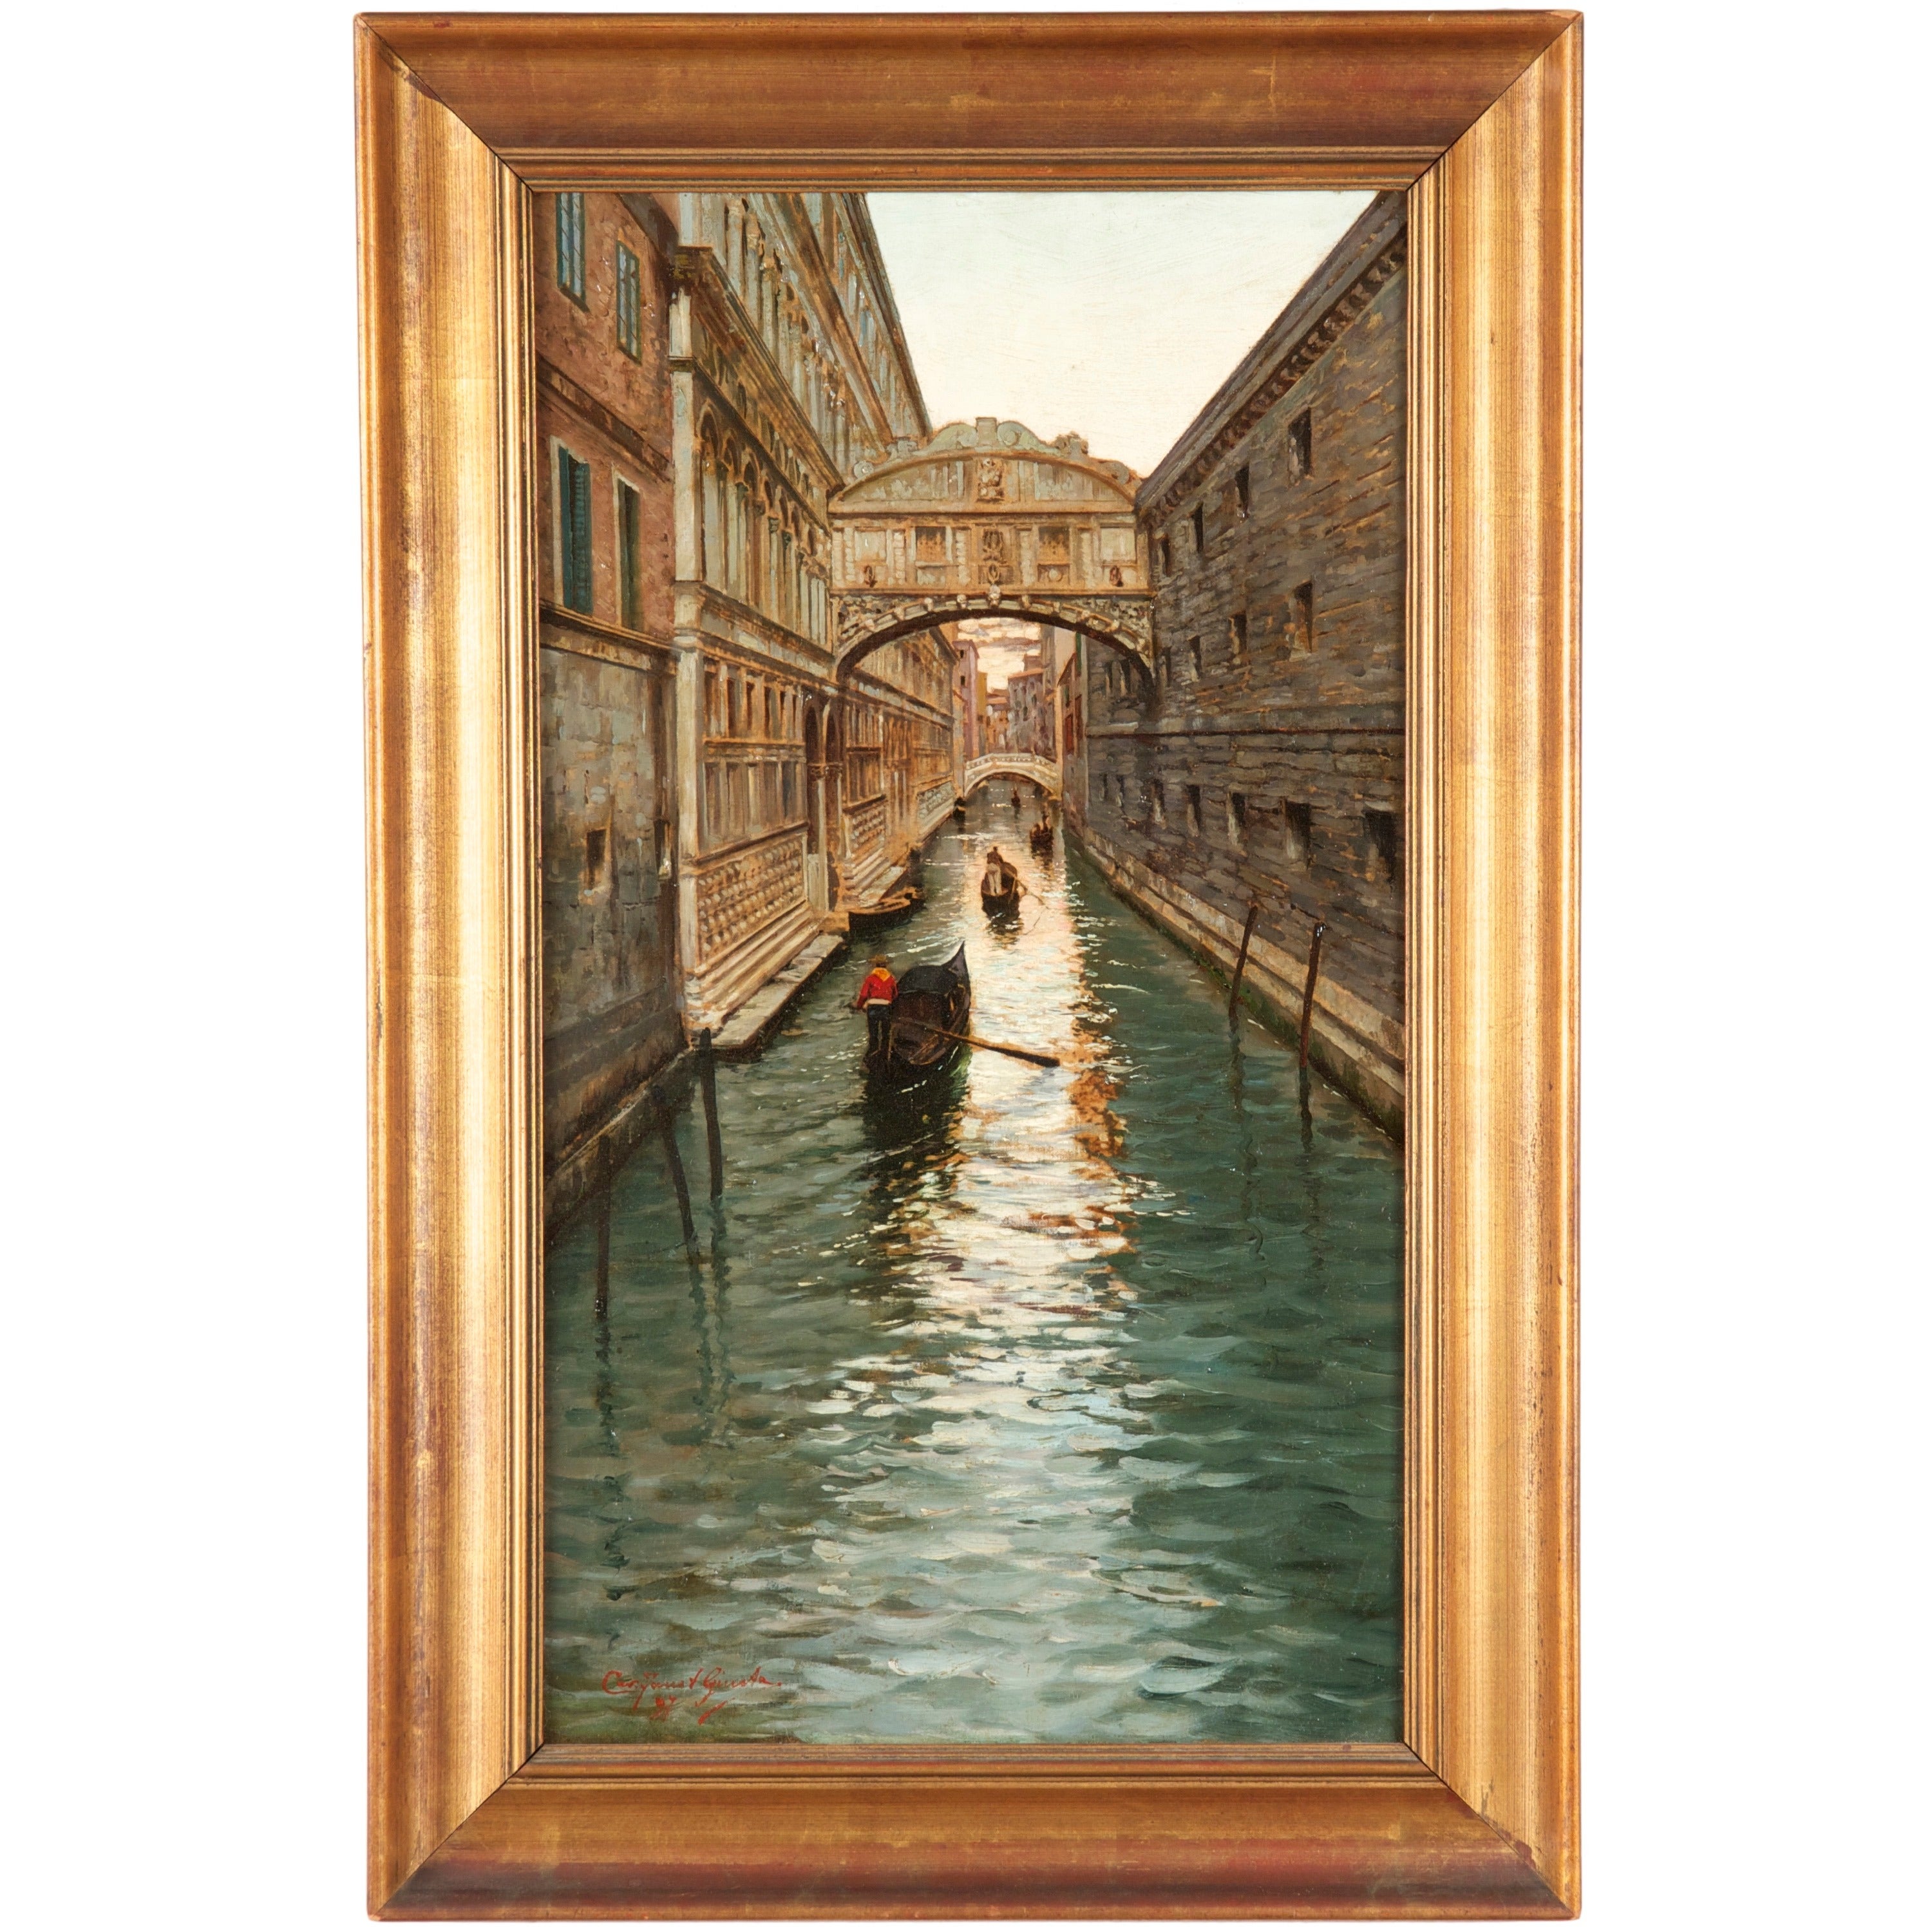 Fausto Giusto (Italian, 1867-1941) Venetian Canal Antique Painting c. 1897